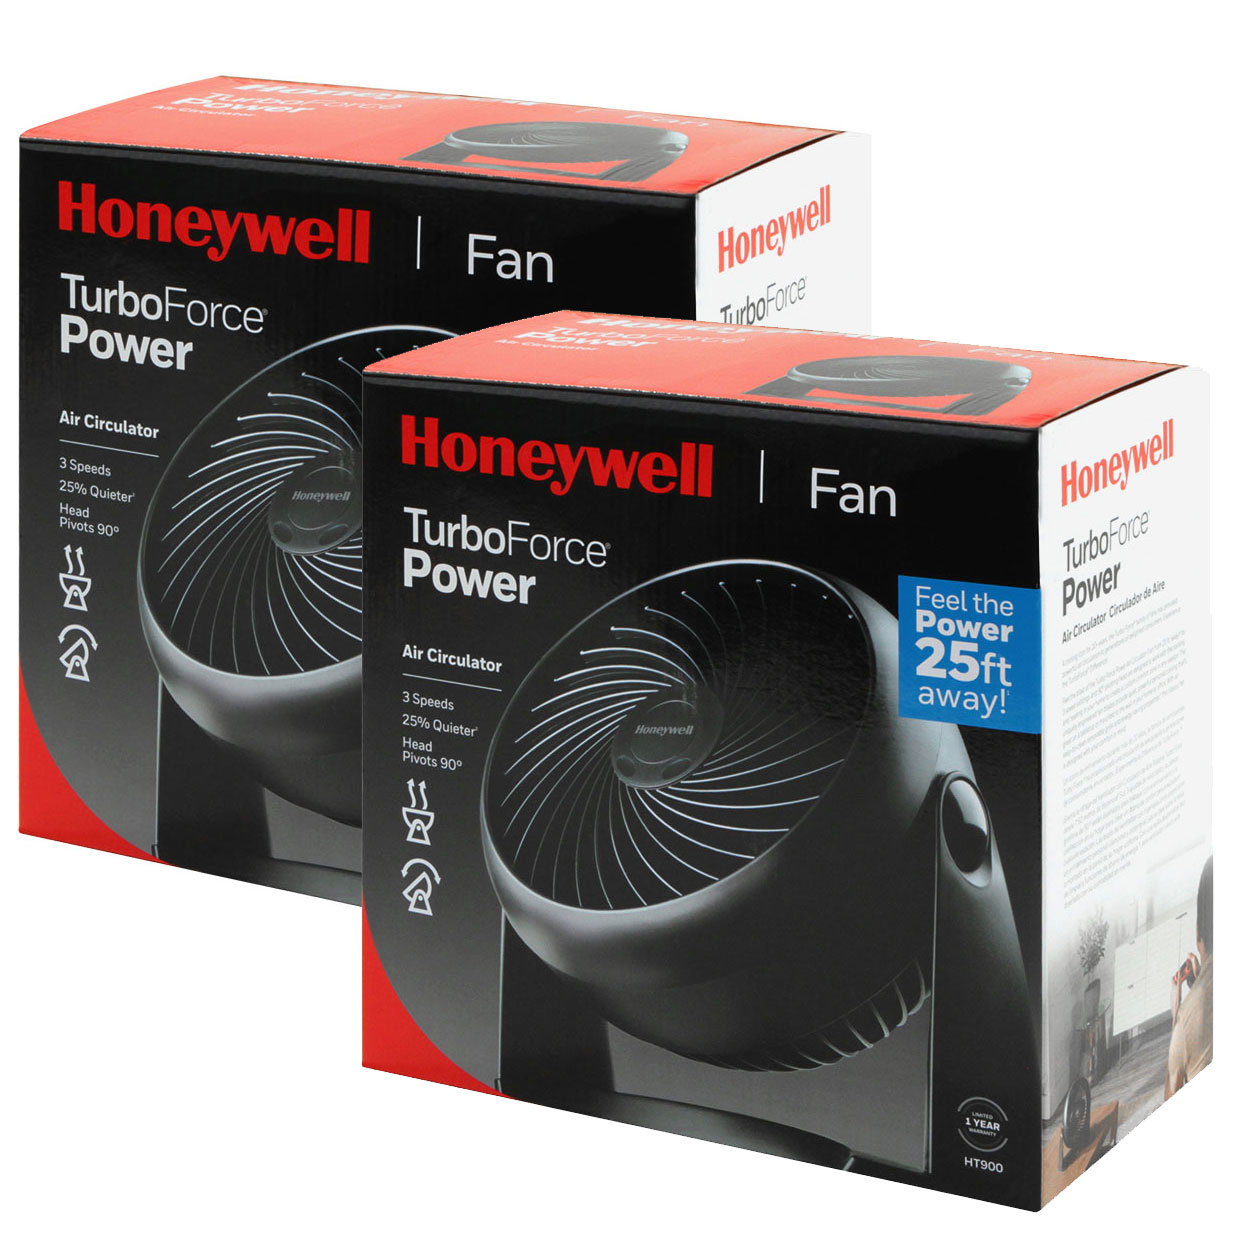 2 Pack Bundle of Honeywell Whole Room Air Circulator Fan, HT-908